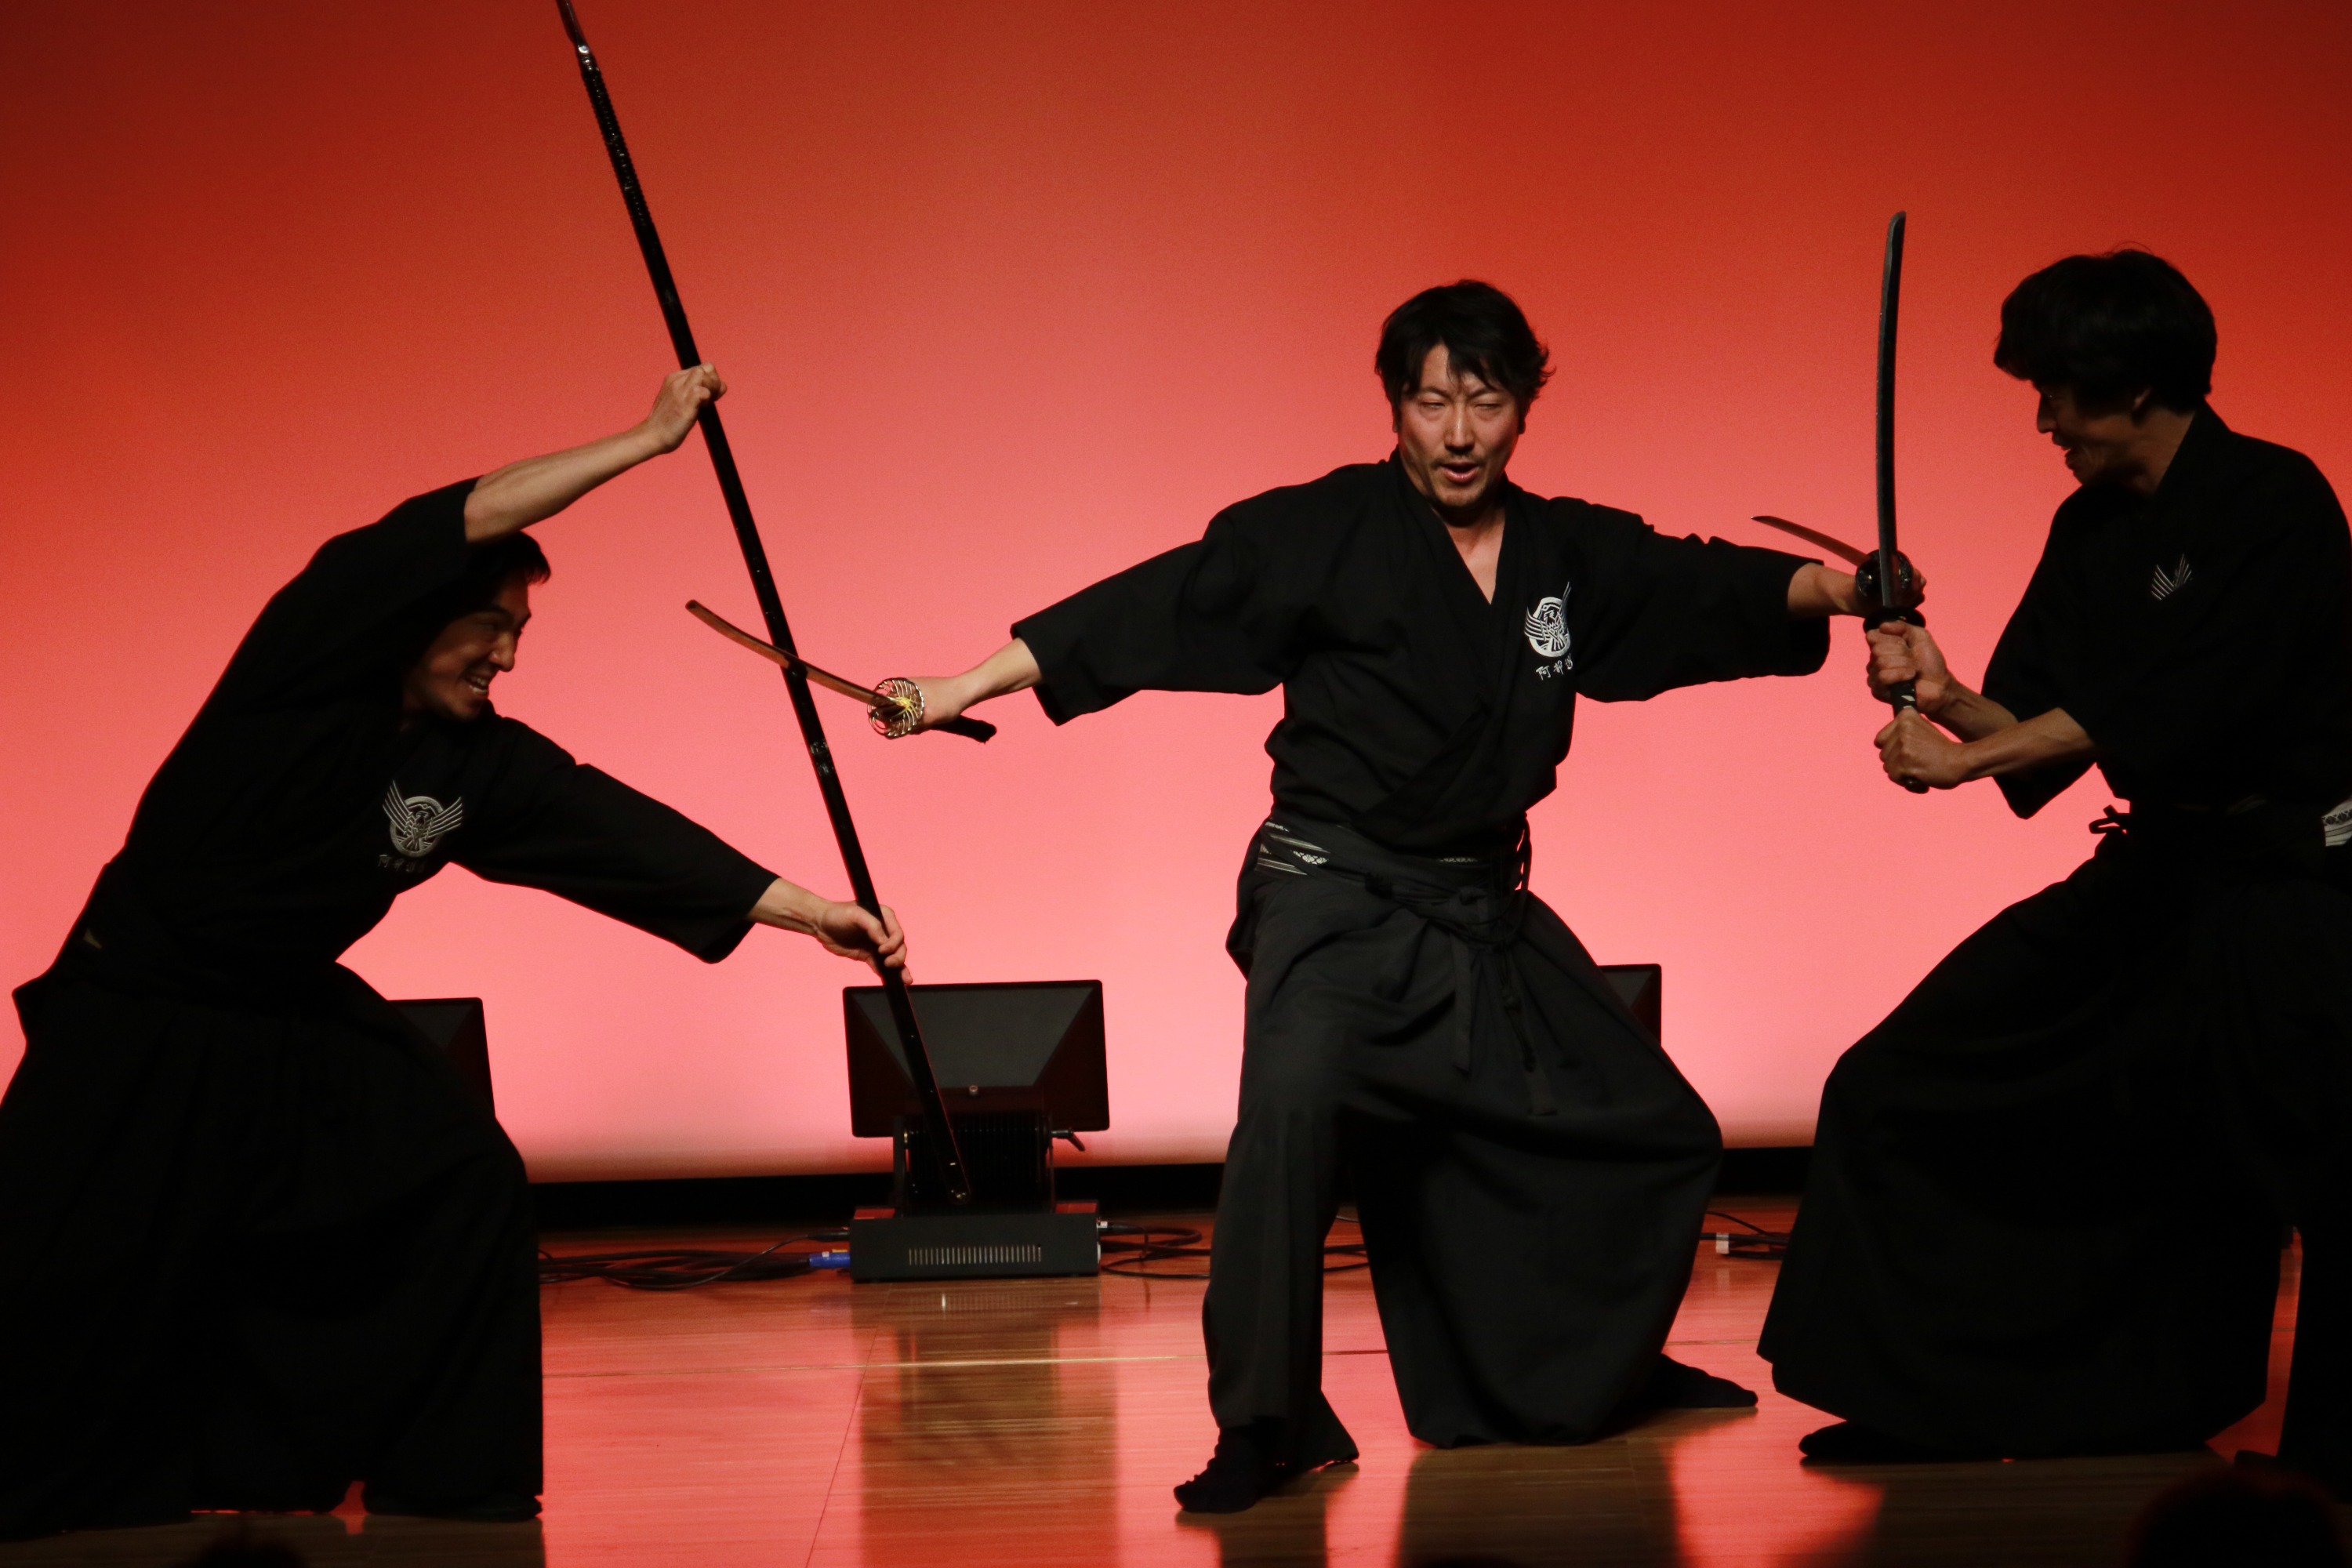 Samurai sword fighting experience (Tokyo)